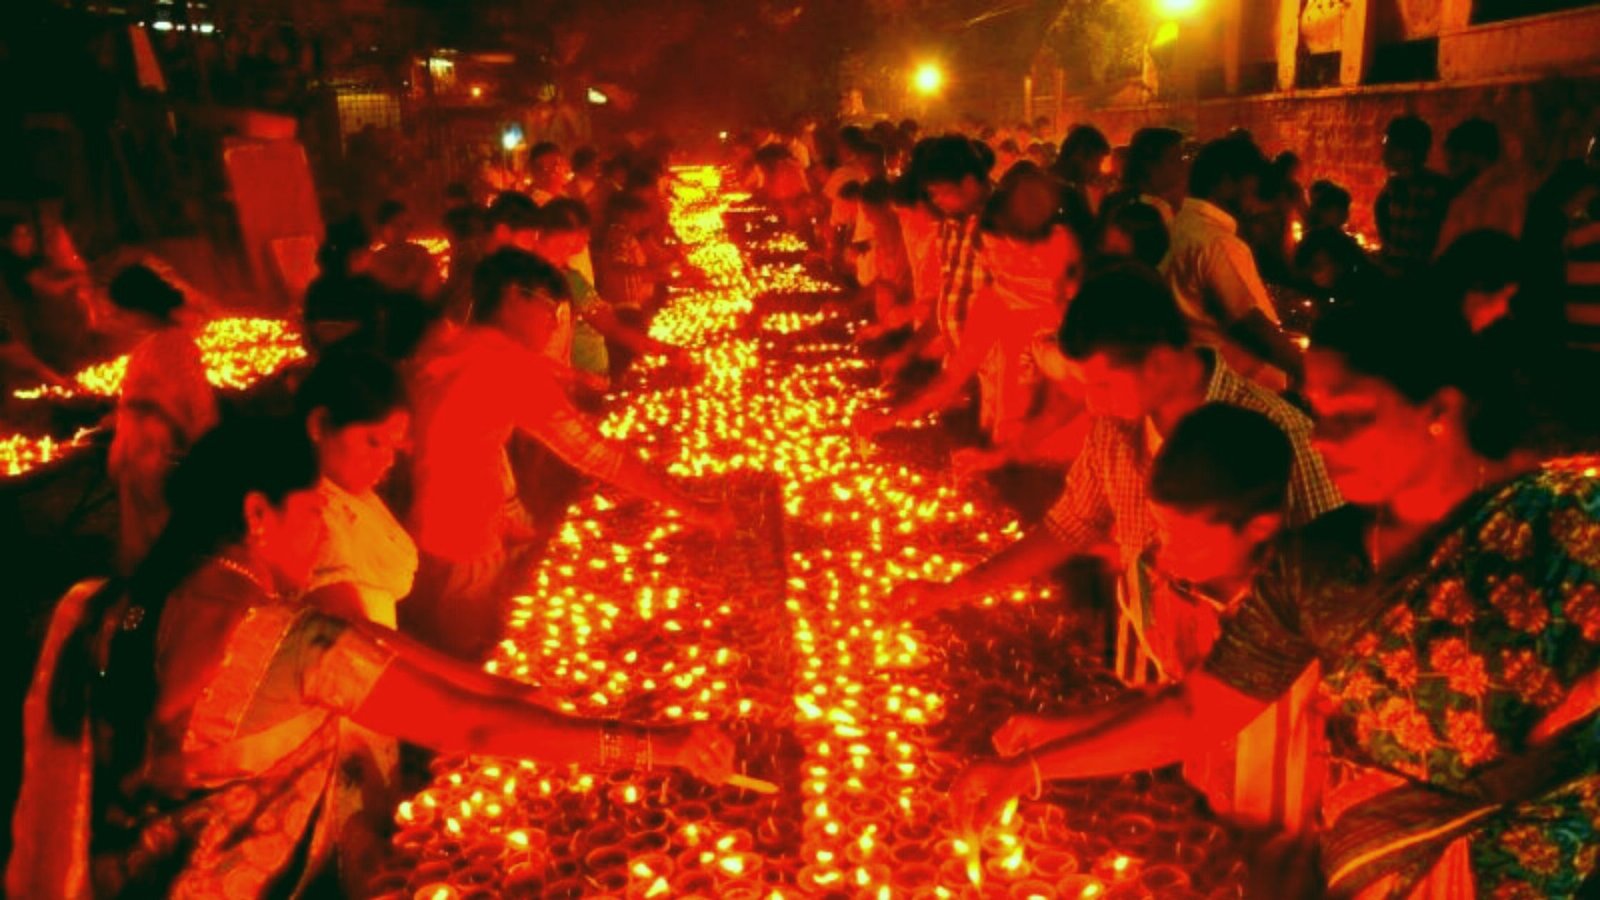 7 Best festivals of tamil nadu in tamil